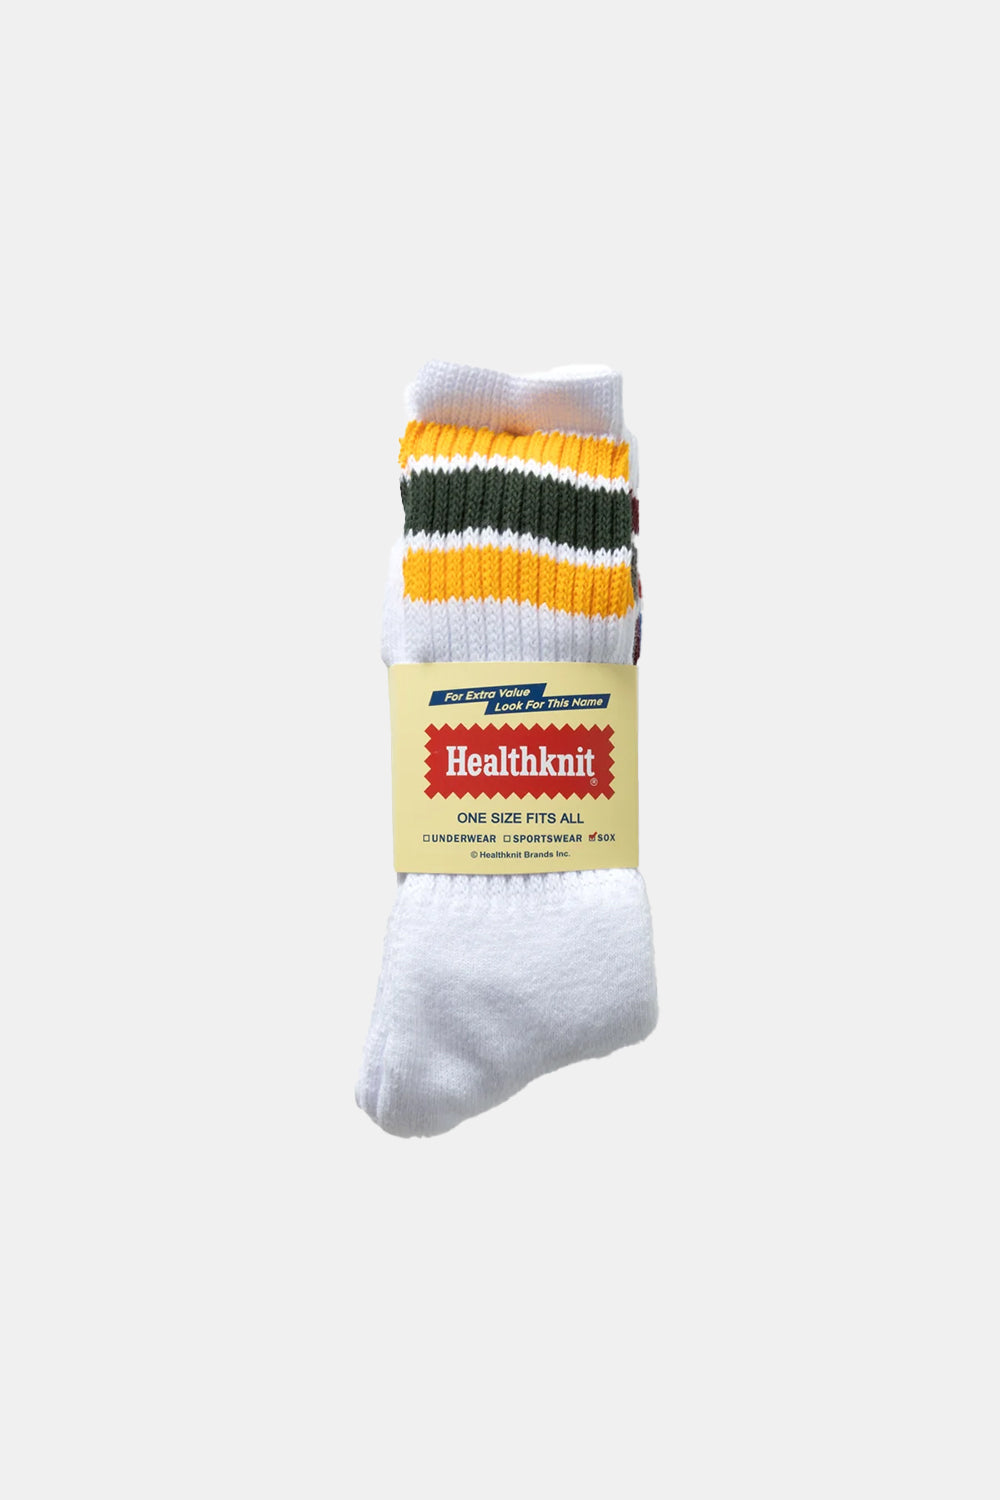 Healthknit 3 Pack 3 Line Crew Socks (Red/Green/Grey)
